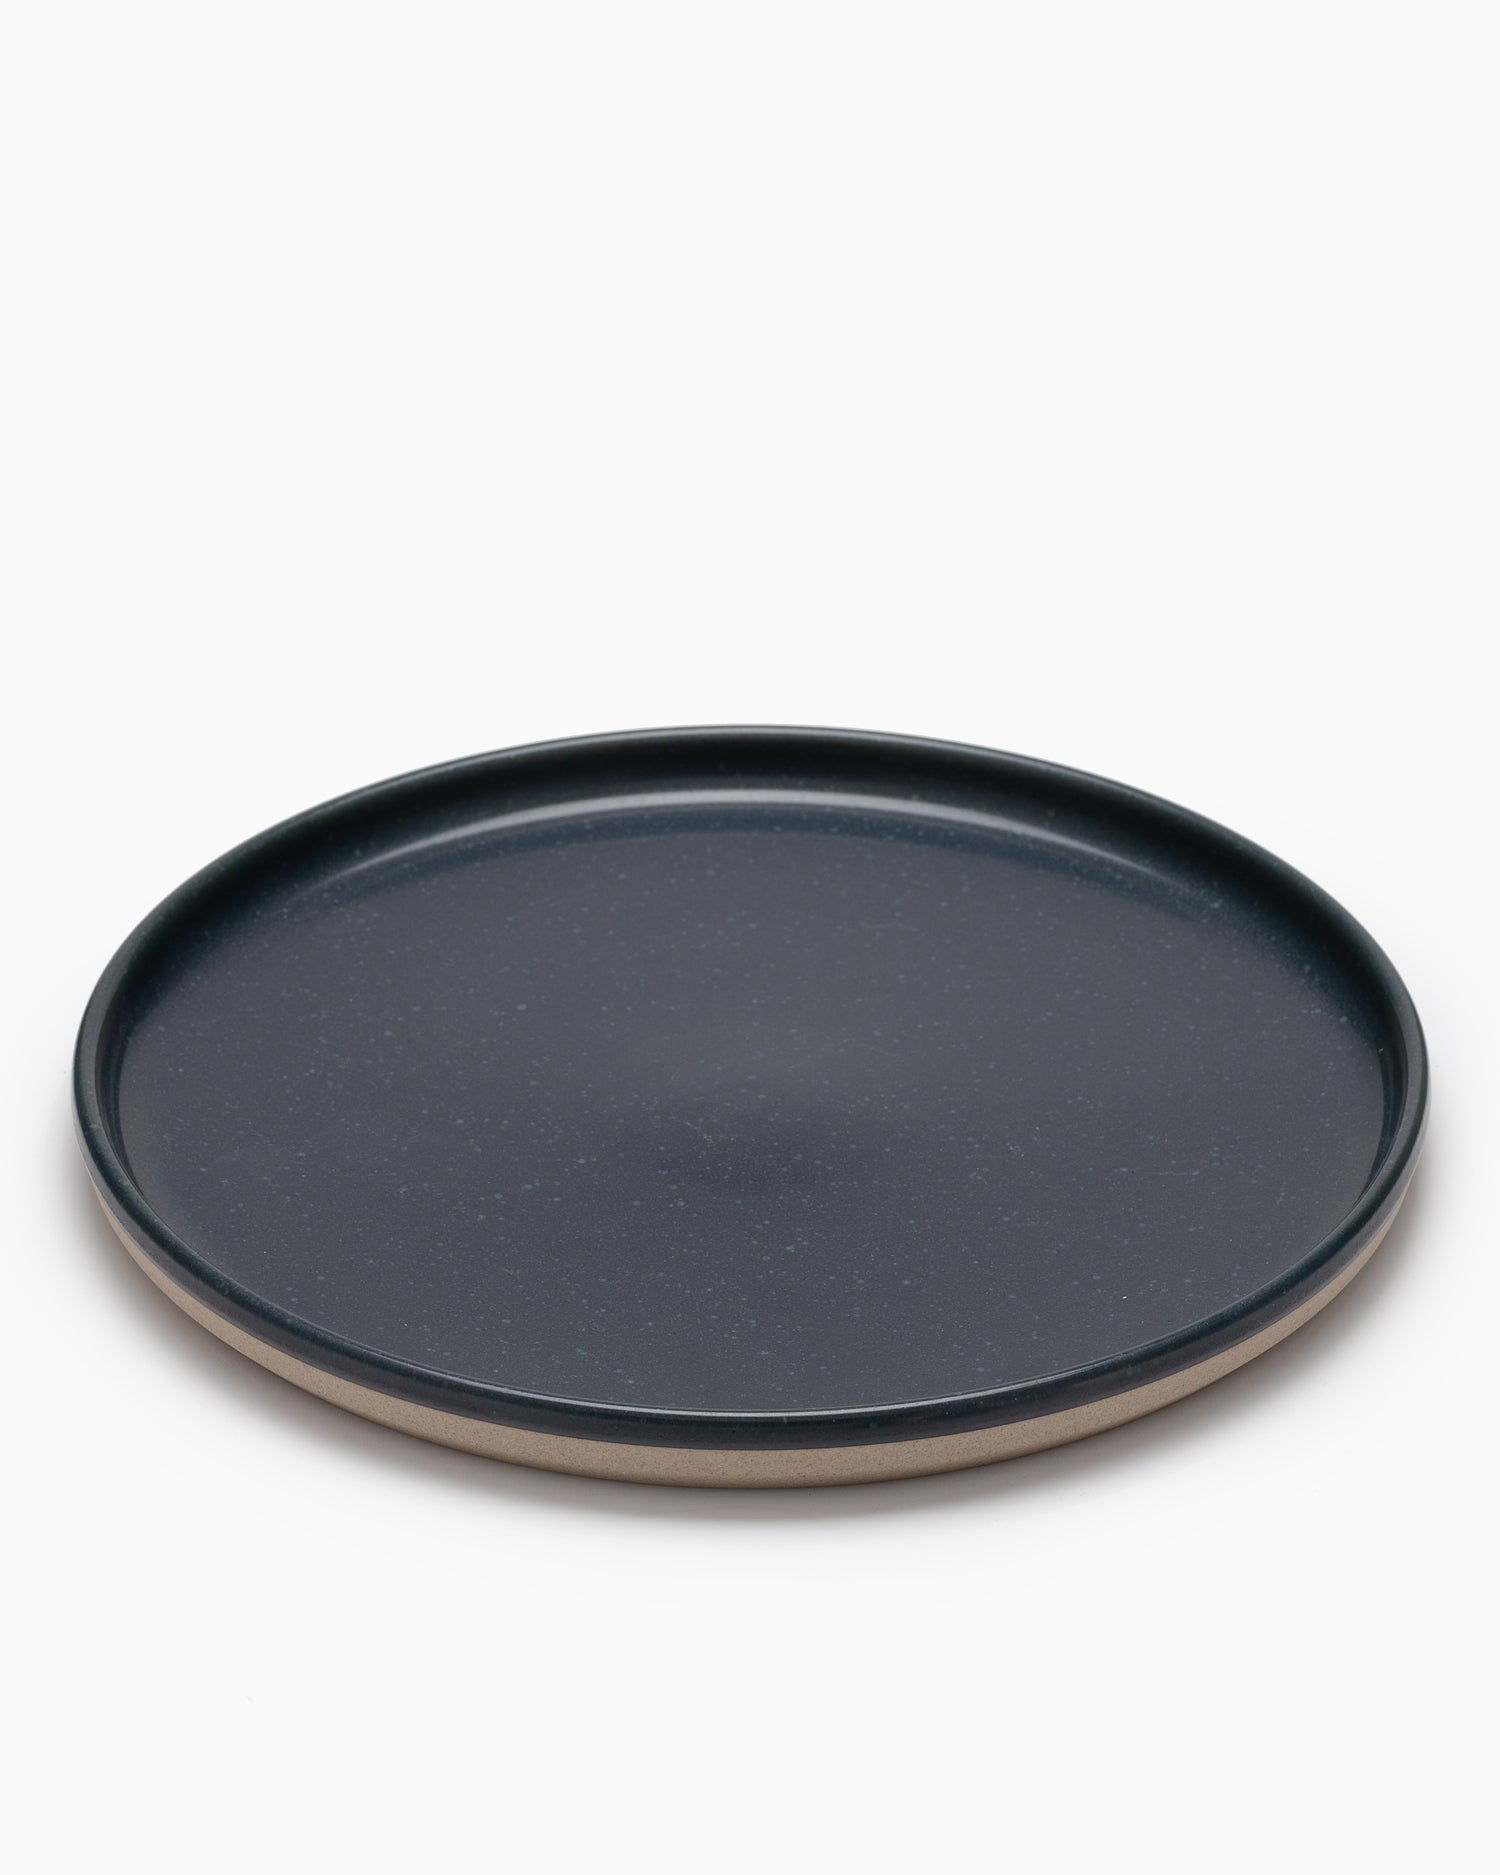 CLK-151 Large Plate - Black